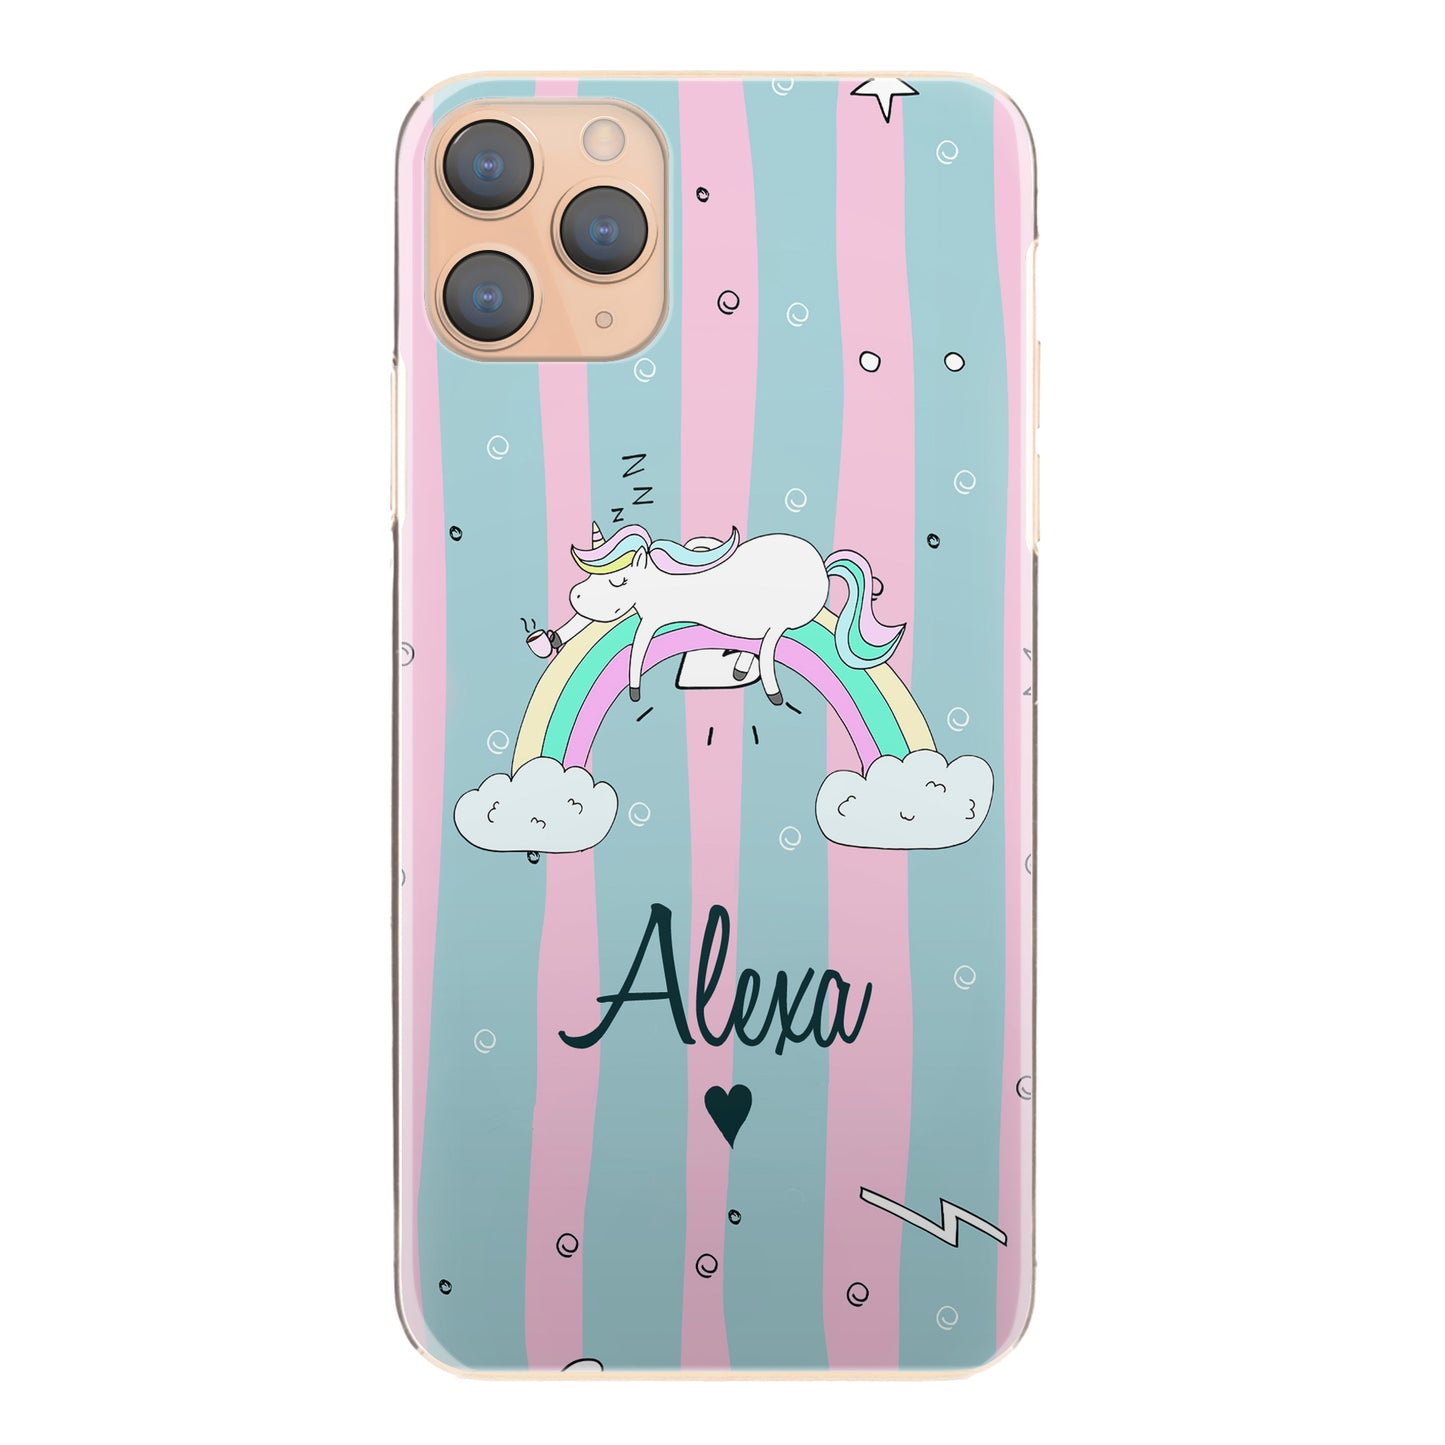 Personalised Oppo Phone Hard Case with Sleeping Unicorn and Rainbow on Cartoon Stripes